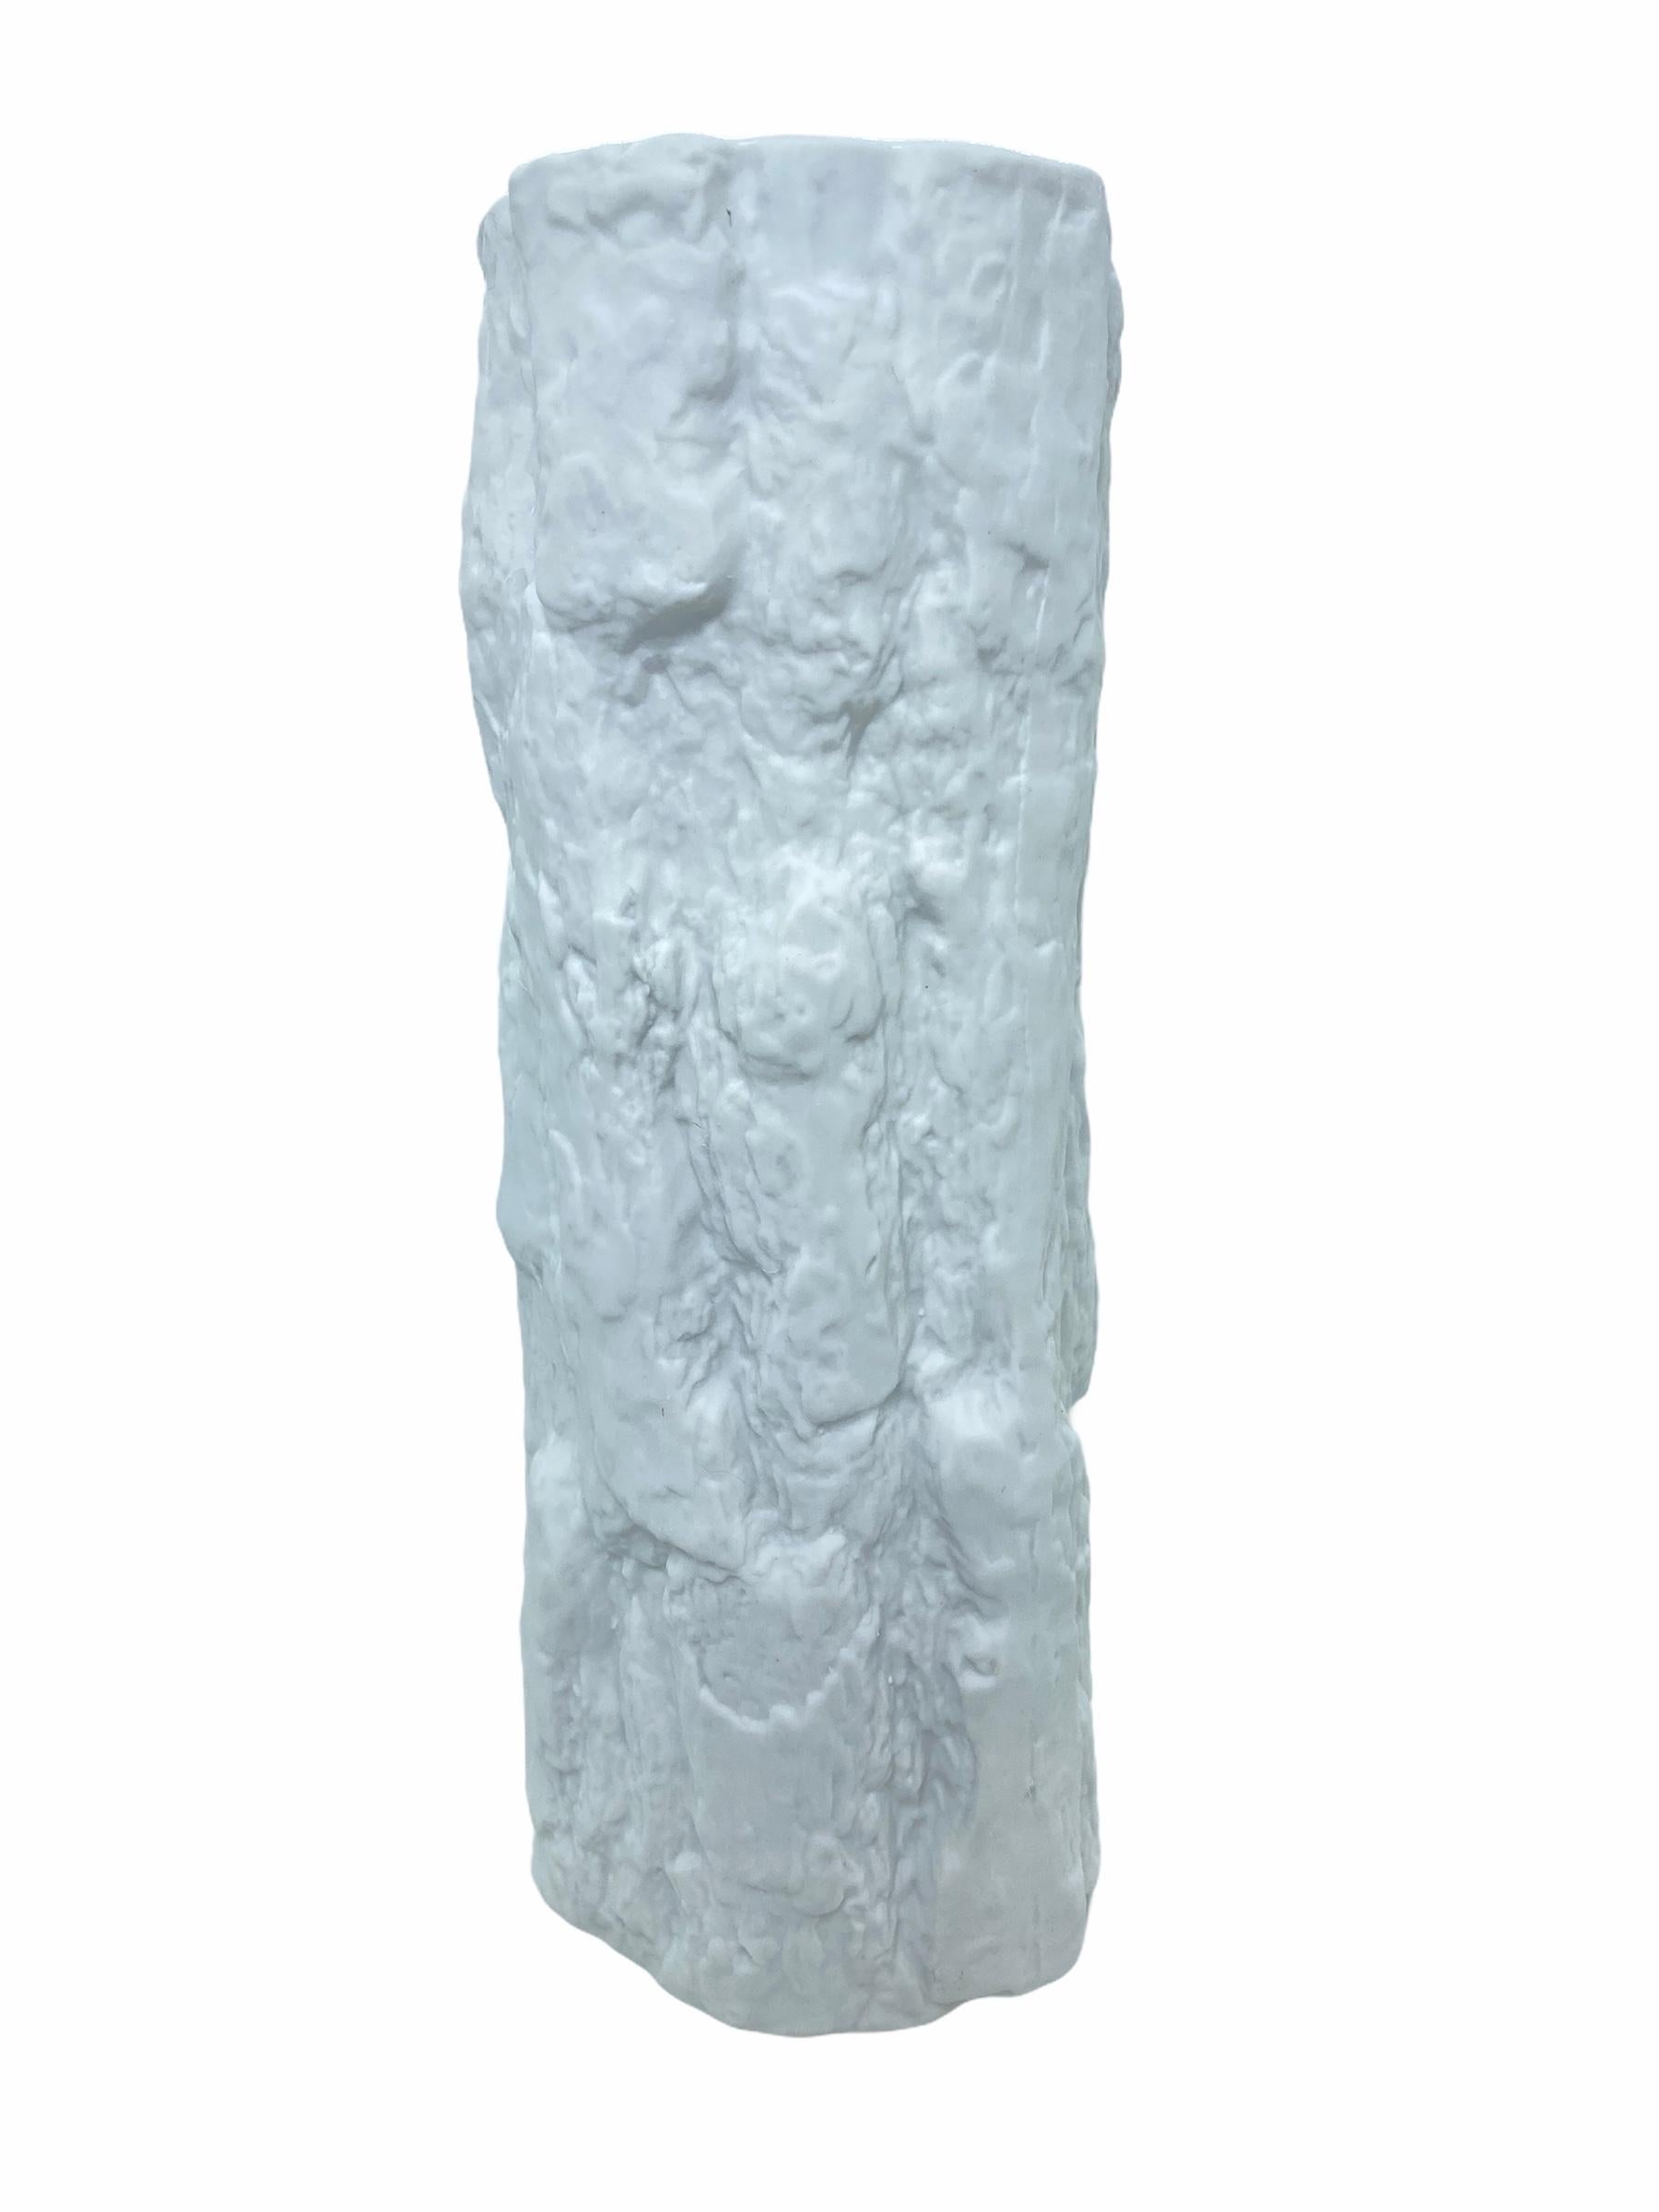 bareuther vase